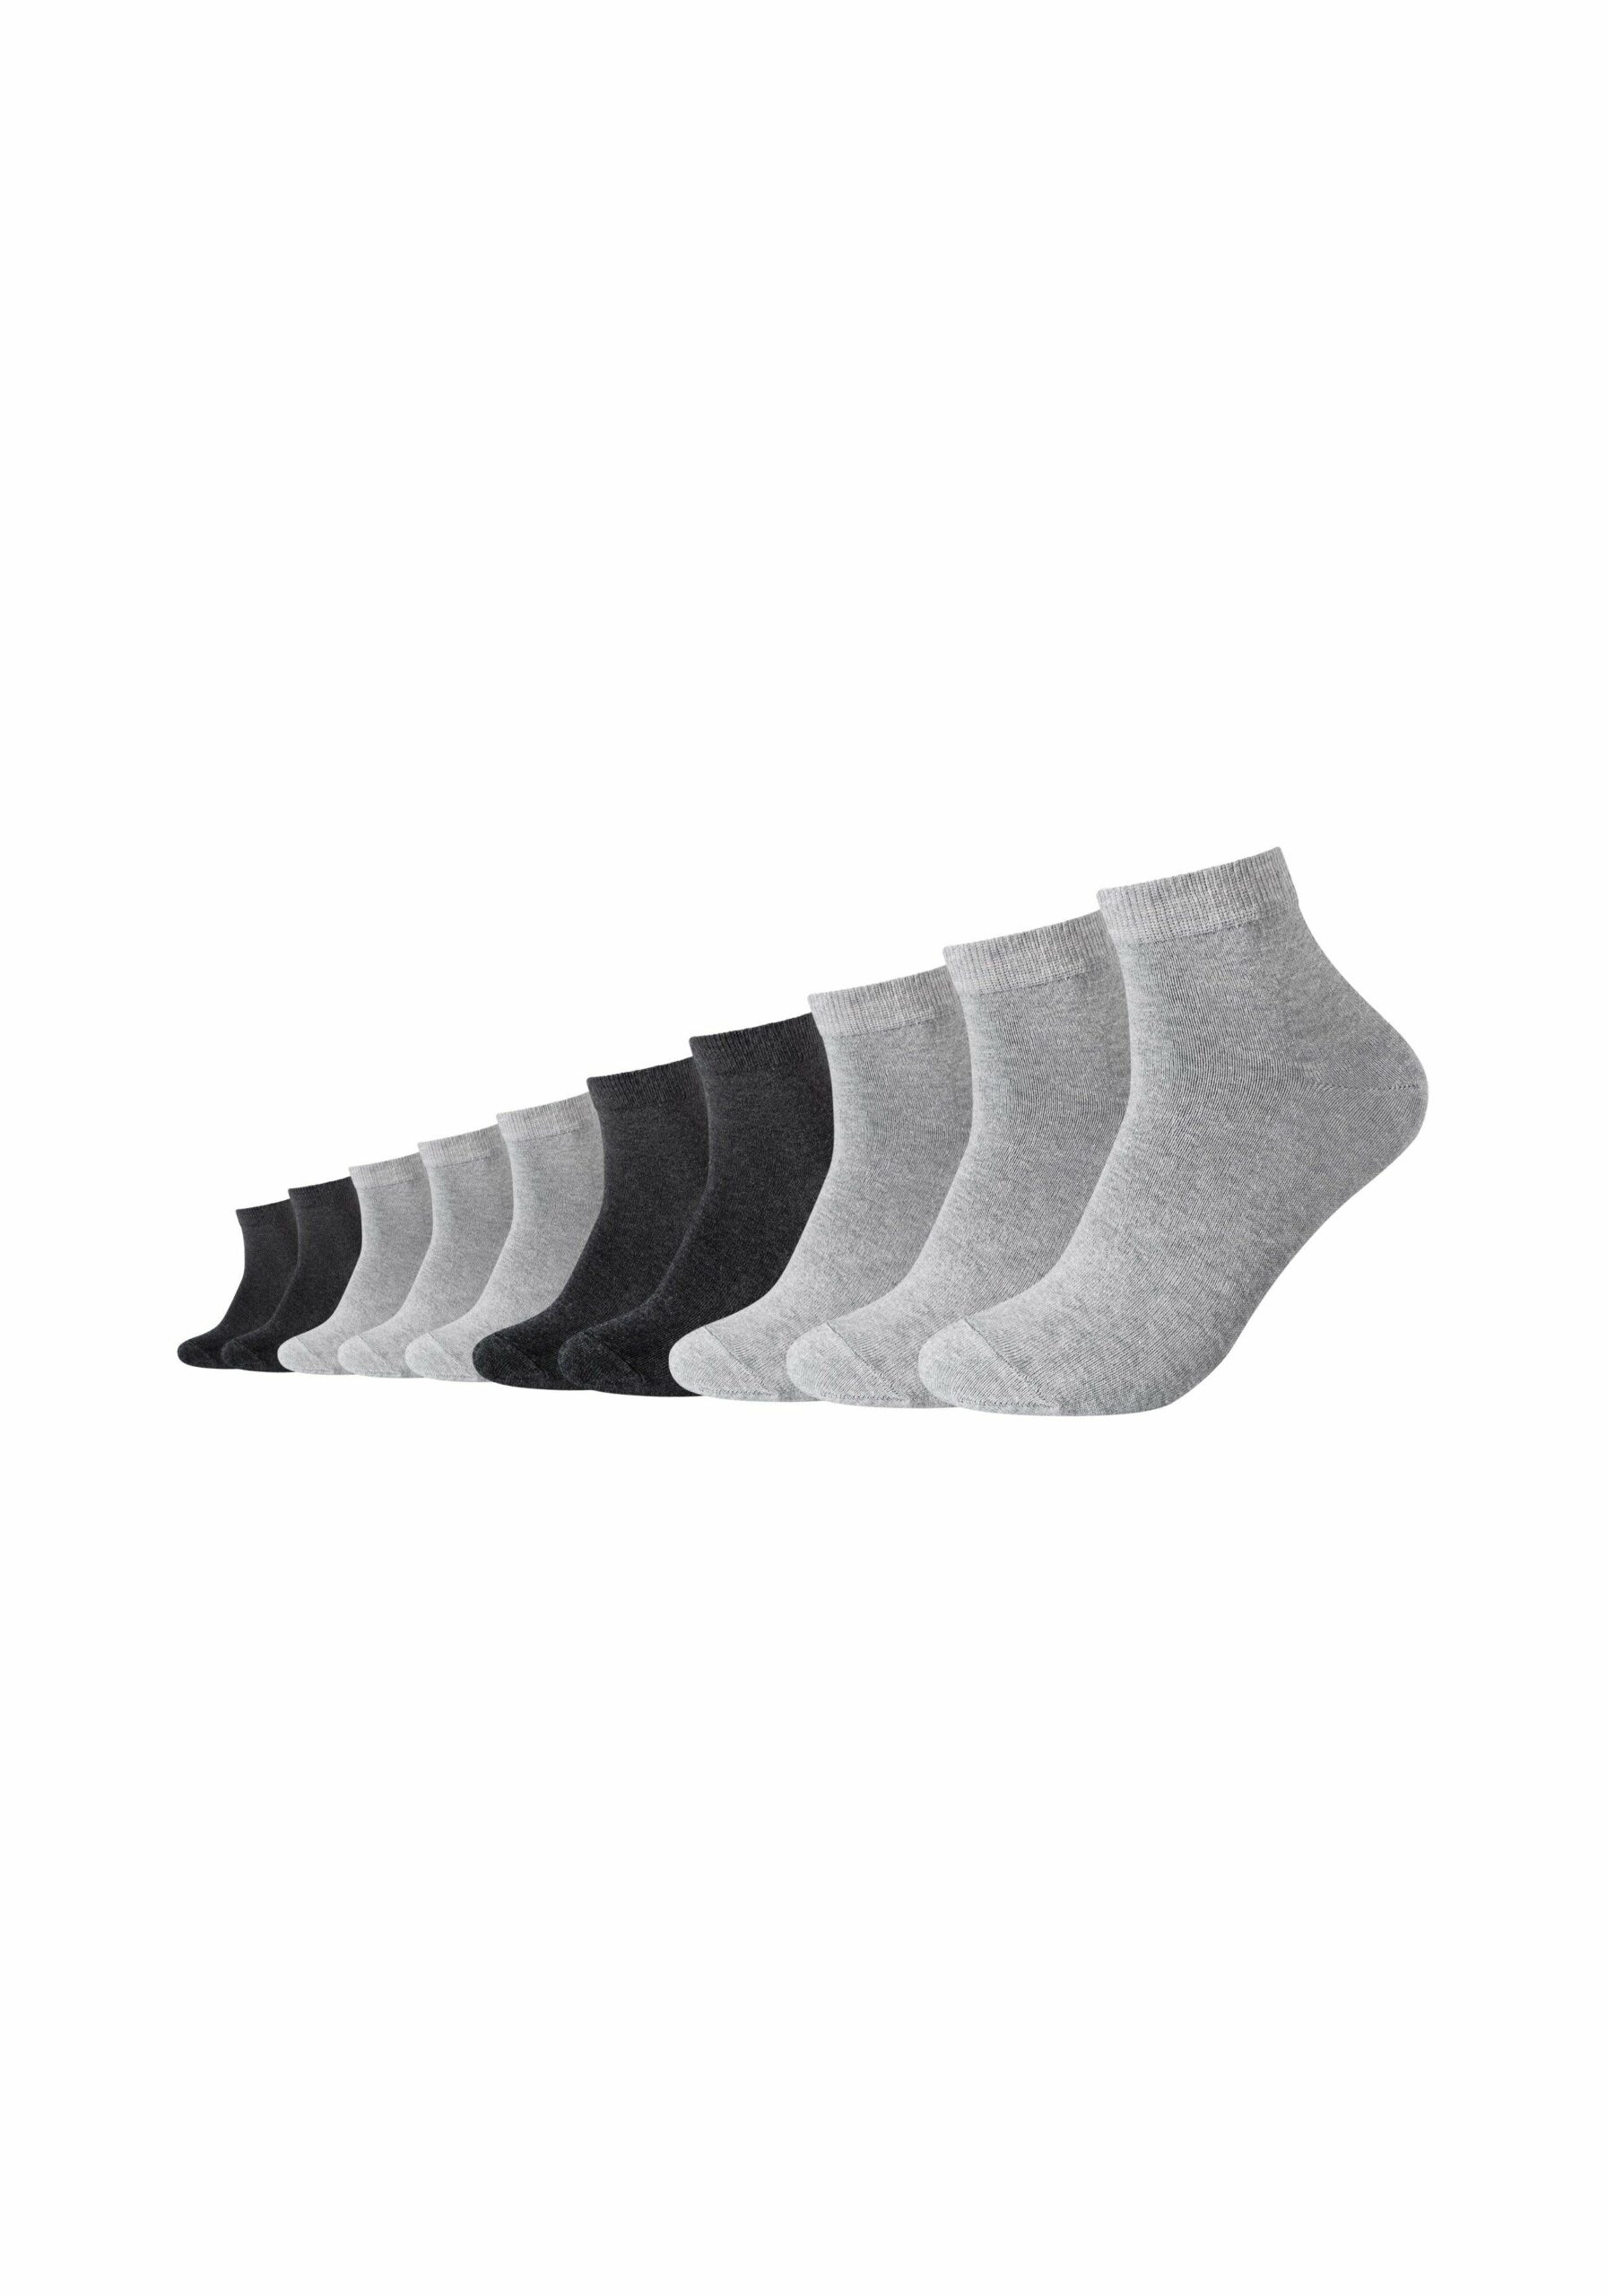 Strümpfe Socken bestellen & online